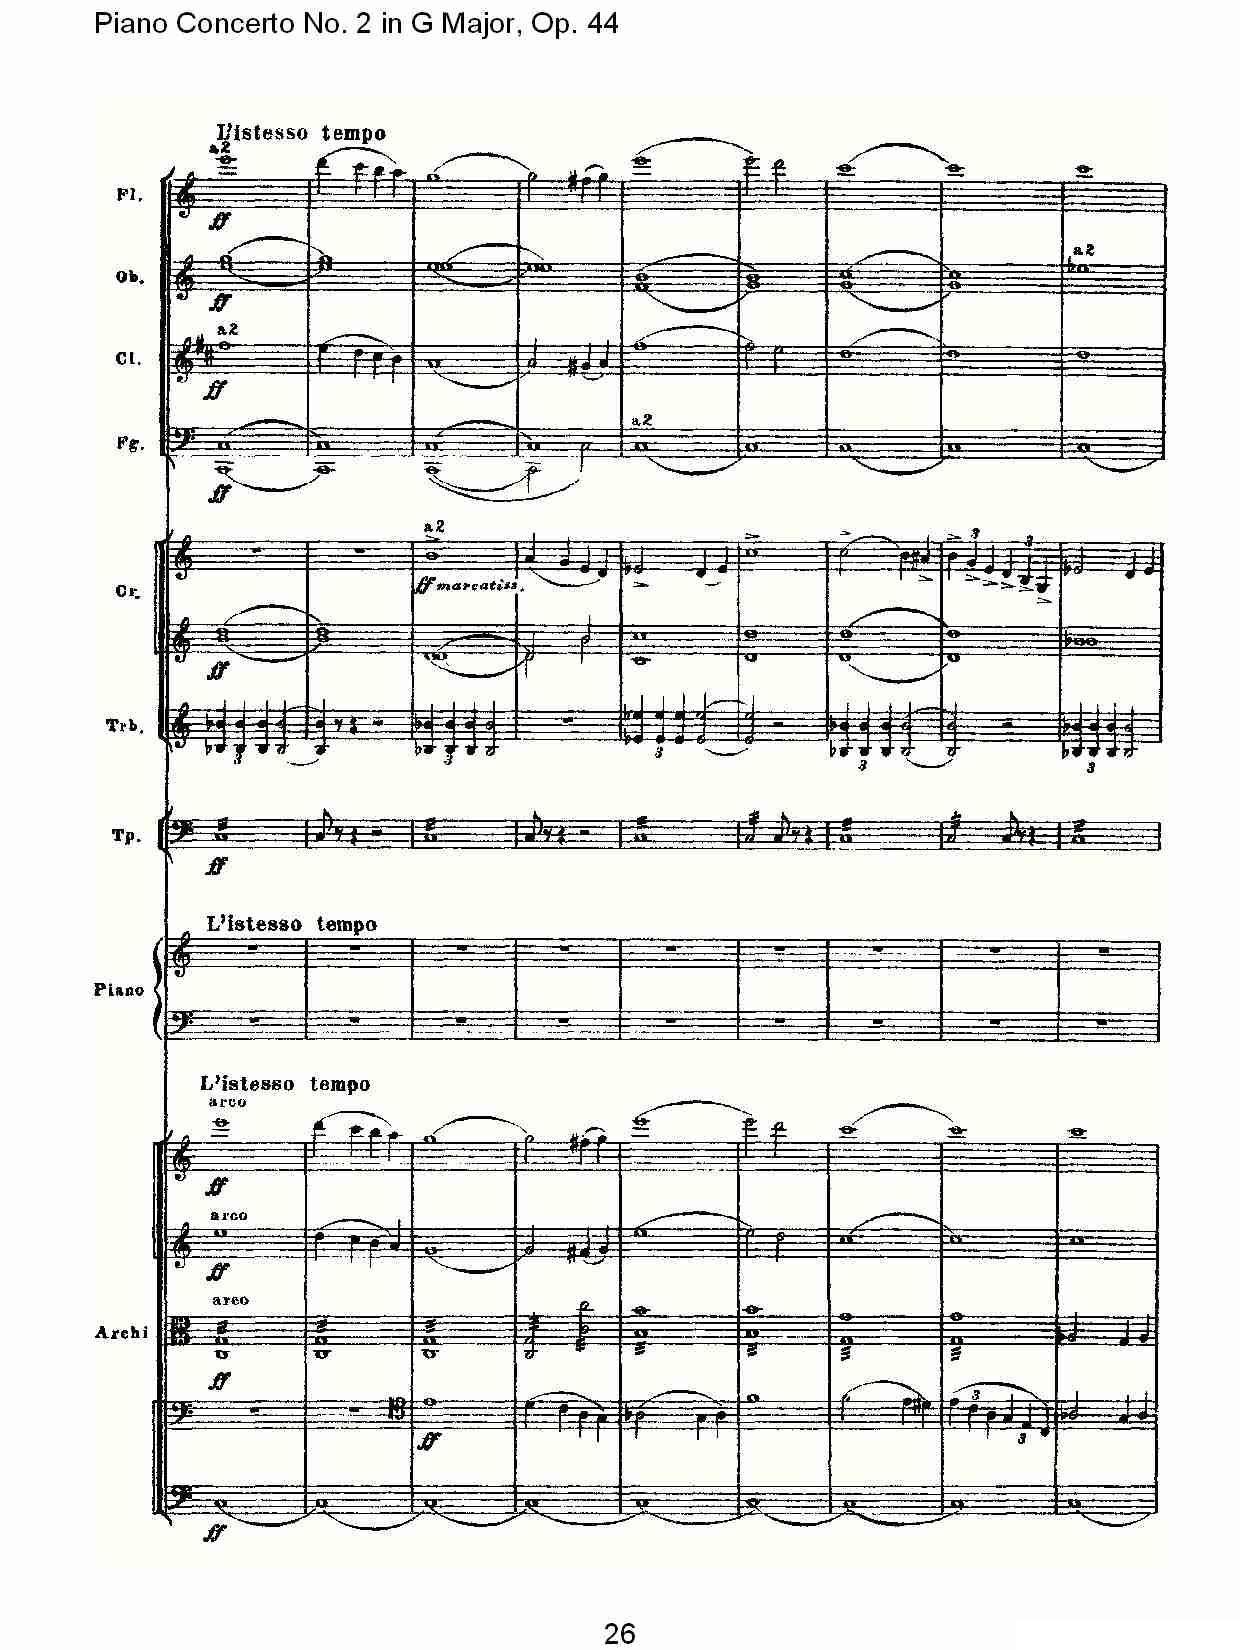 G大调第二钢琴协奏曲, Op.44第一乐章（一）钢琴曲谱（图26）